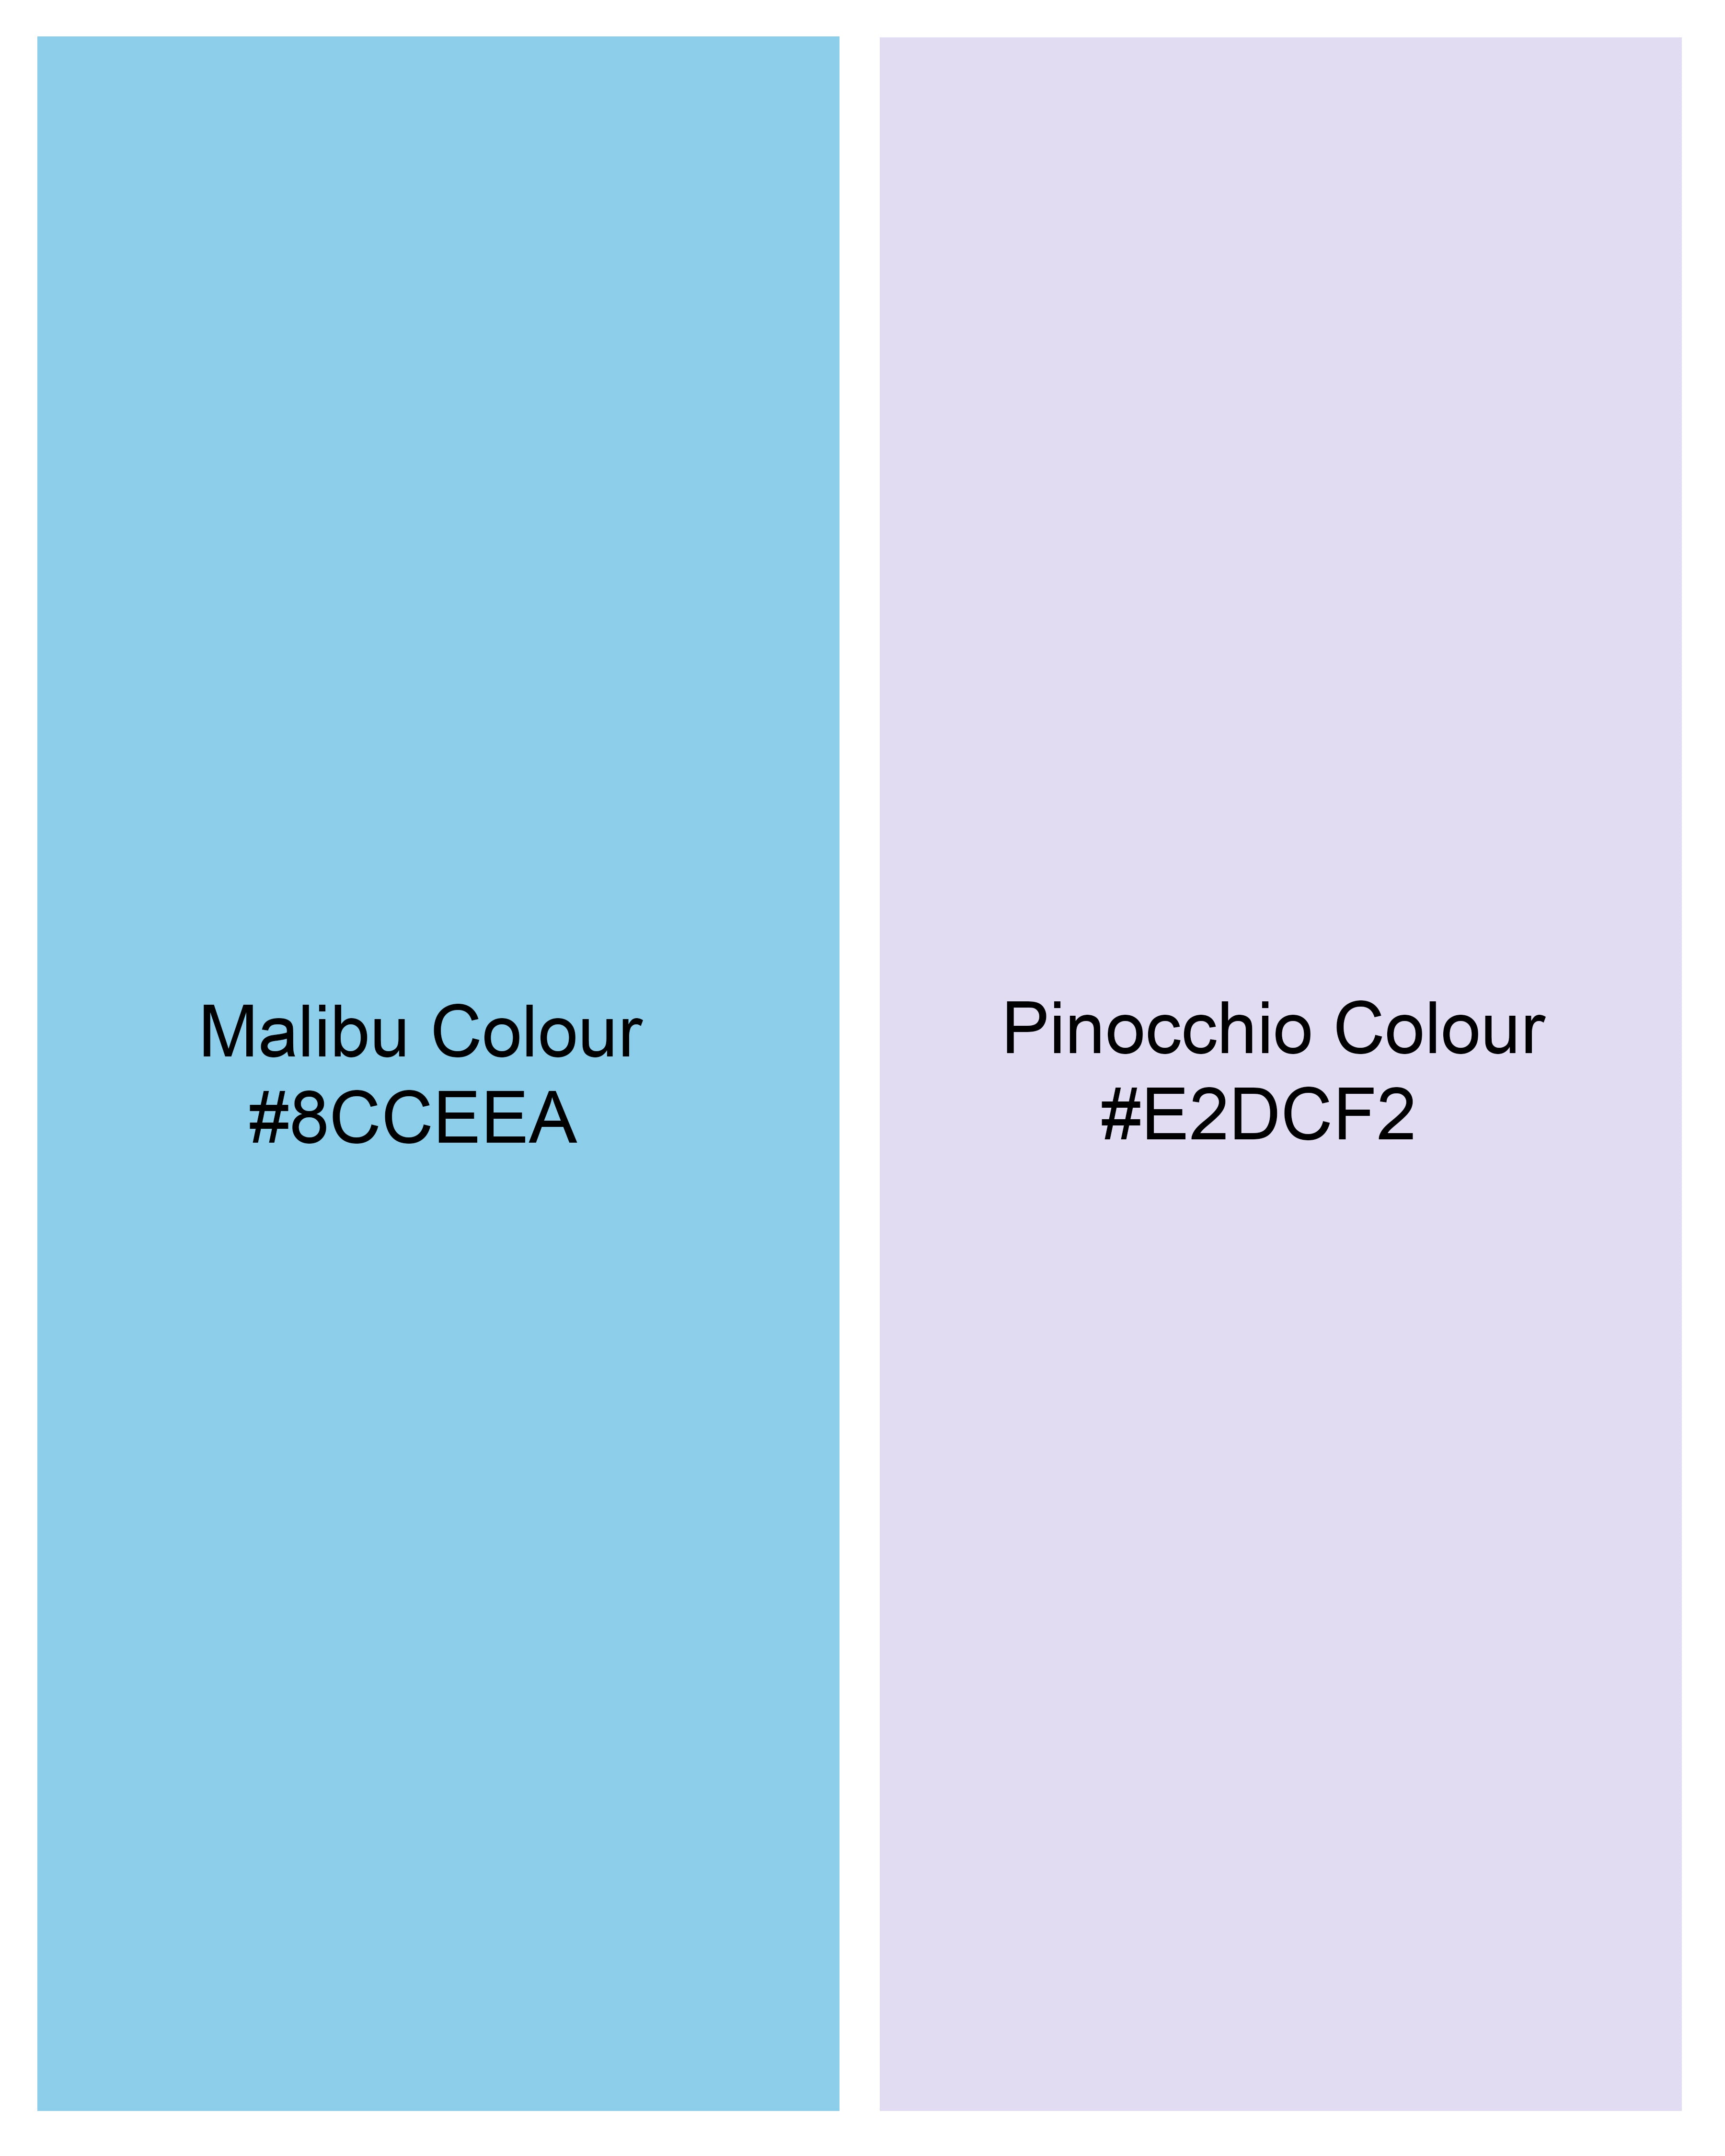 Malibu Sky Blue with Pinocchio Purple and Black Royal Oxford Designer Shirt 9503-P237-38, 9503-P237-H-38, 9503-P237-39, 9503-P237-H-39, 9503-P237-40, 9503-P237-H-40, 9503-P237-42, 9503-P237-H-42, 9503-P237-44, 9503-P237-H-44, 9503-P237-46, 9503-P237-H-46, 9503-P237-48, 9503-P237-H-48, 9503-P237-50, 9503-P237-H-50, 9503-P237-52, 9503-P237-H-52